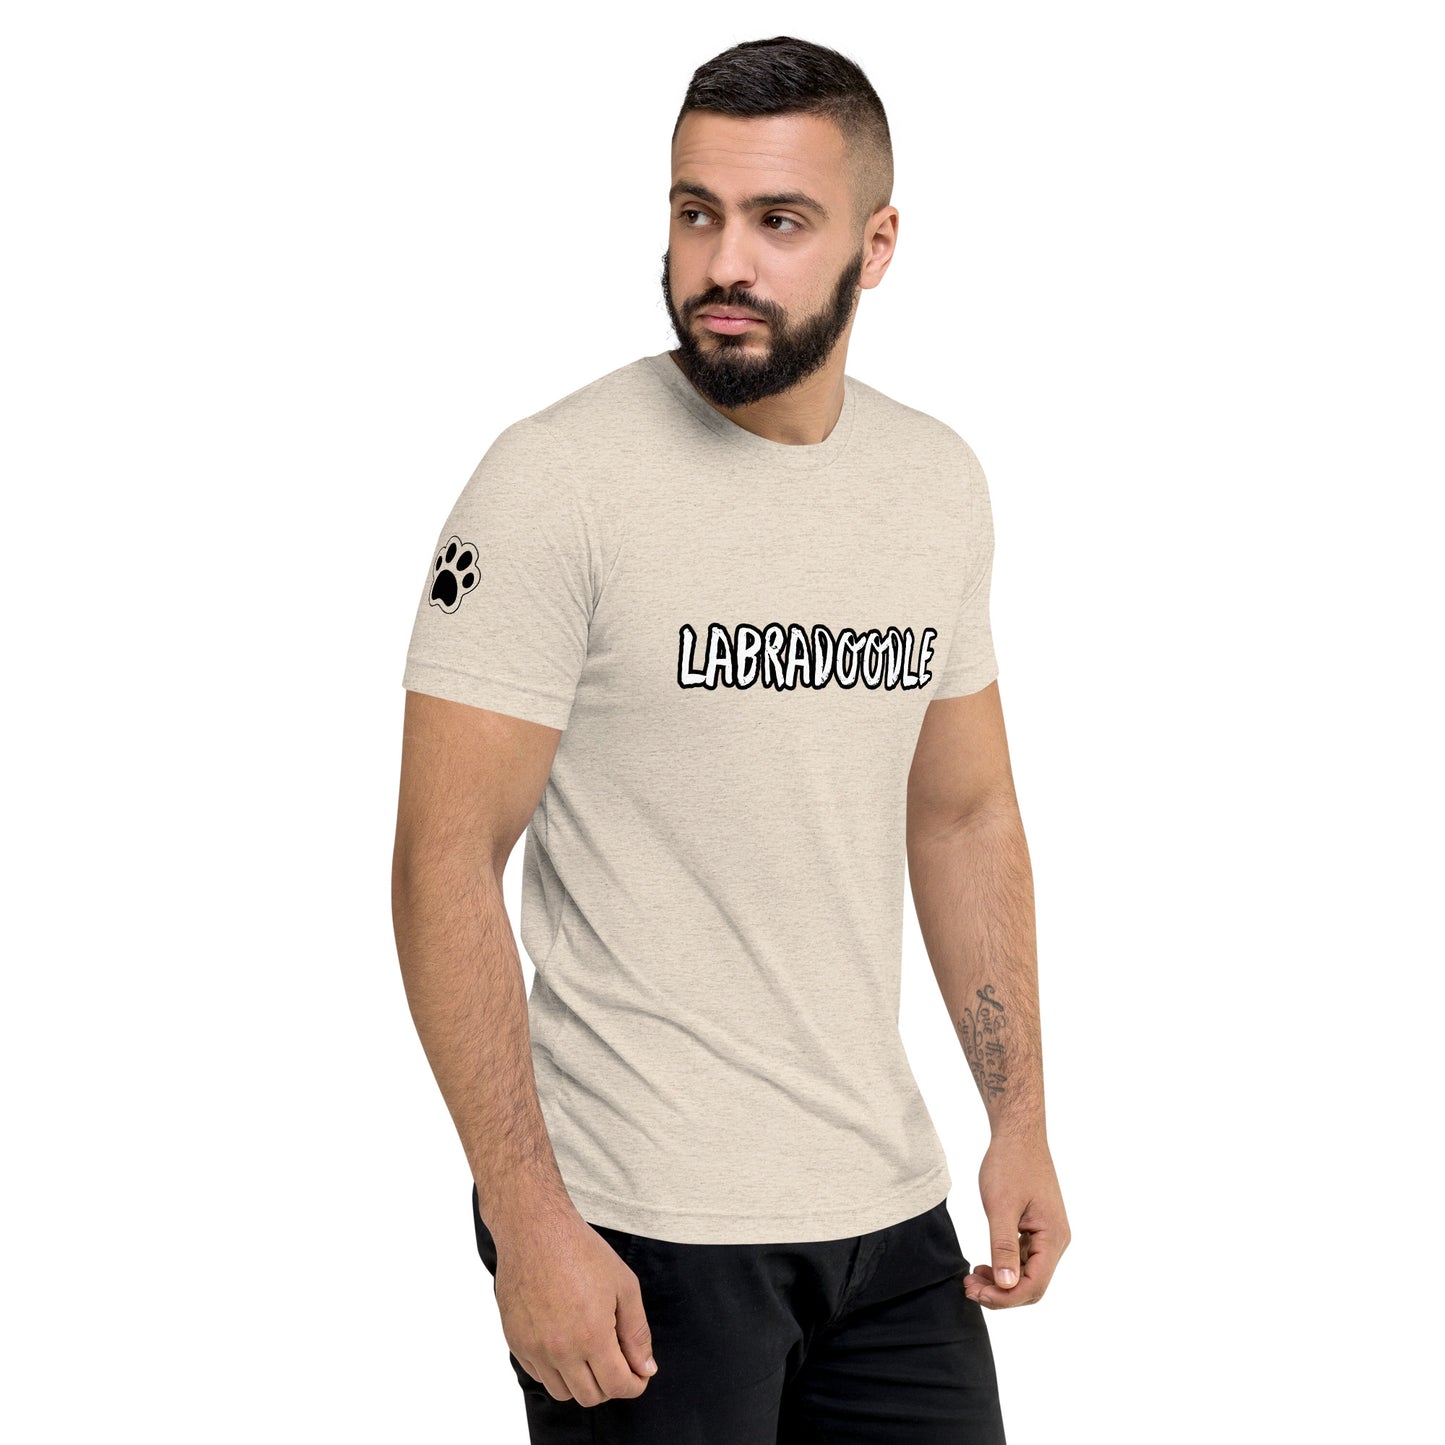 Labradoodle II 954 Signature Short sleeve t-shirt